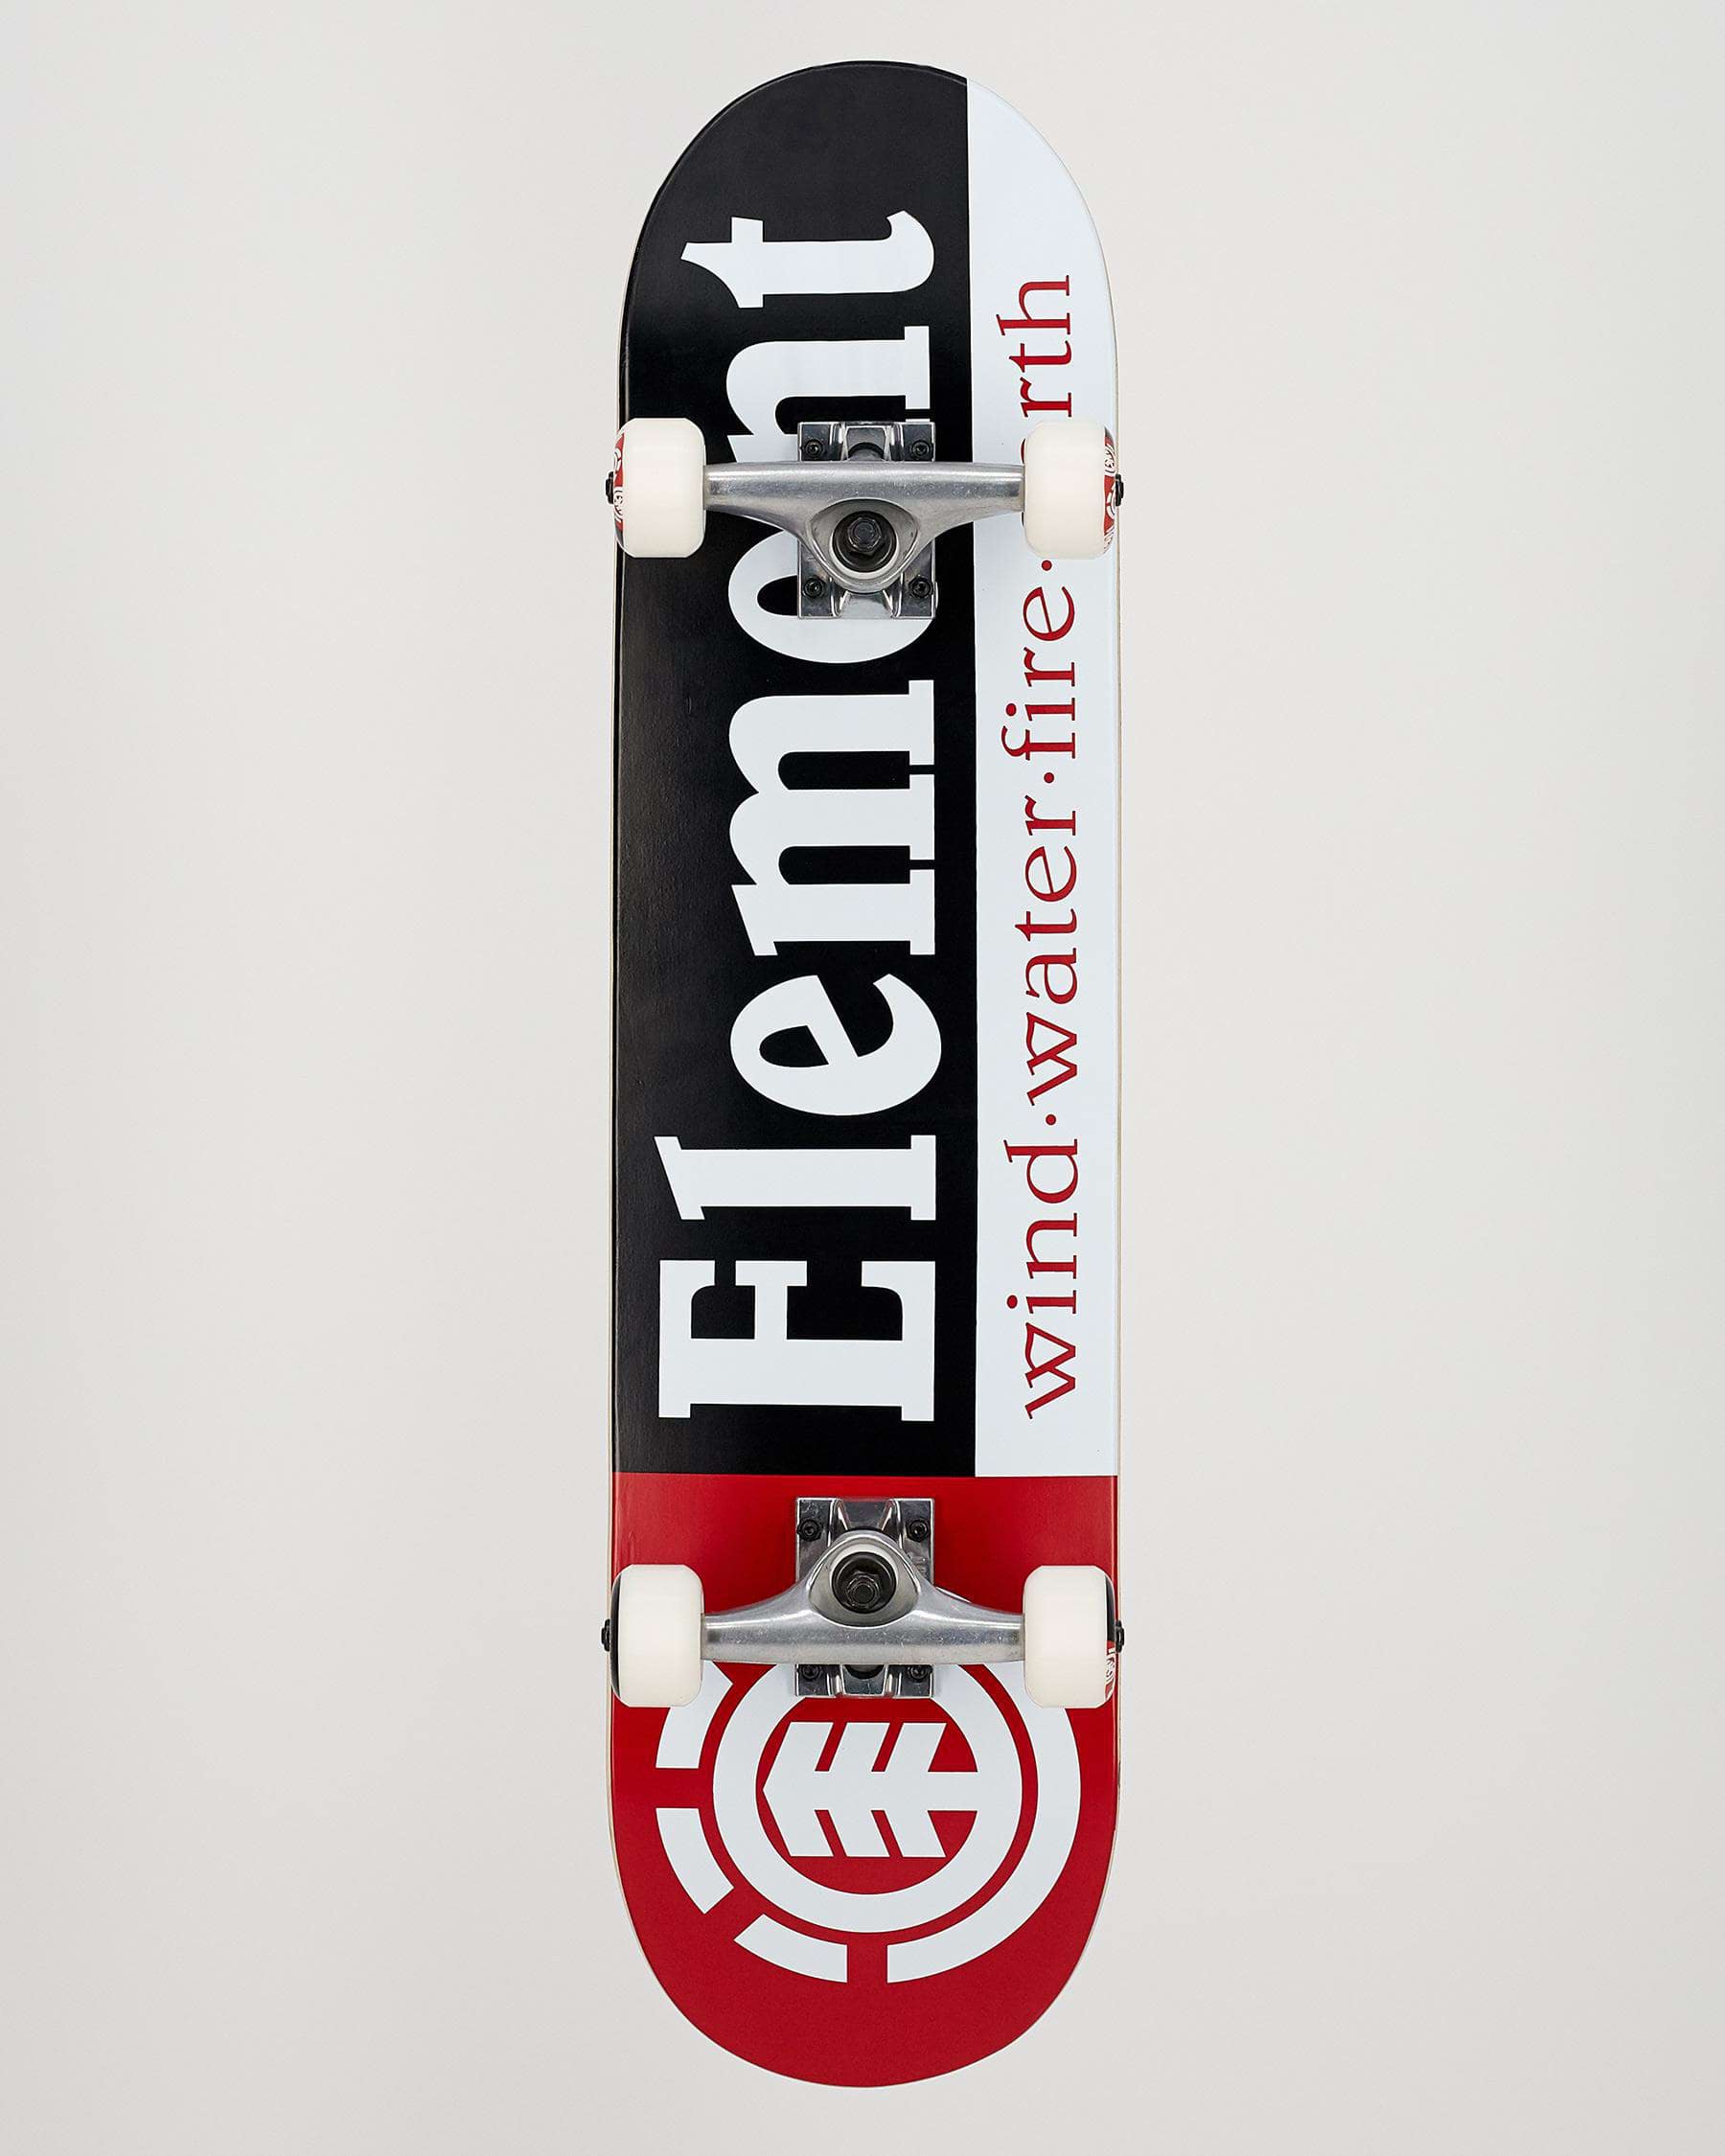 Element Section Complete Skateboard 